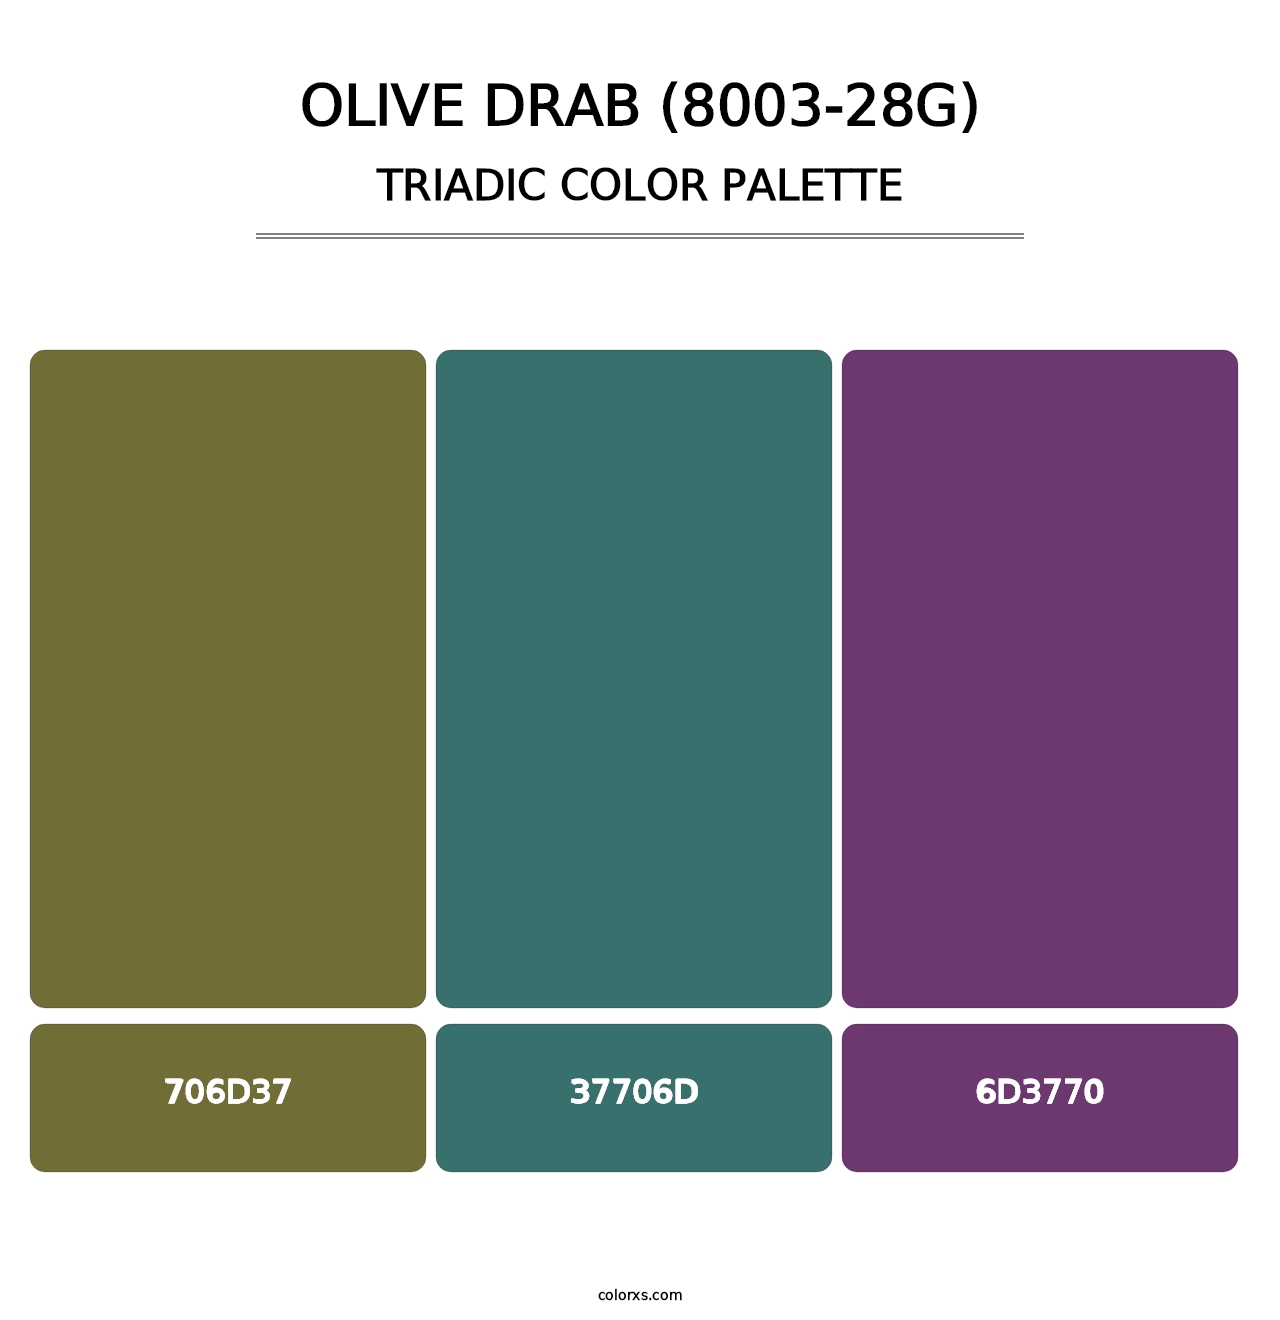 Olive Drab (8003-28G) - Triadic Color Palette